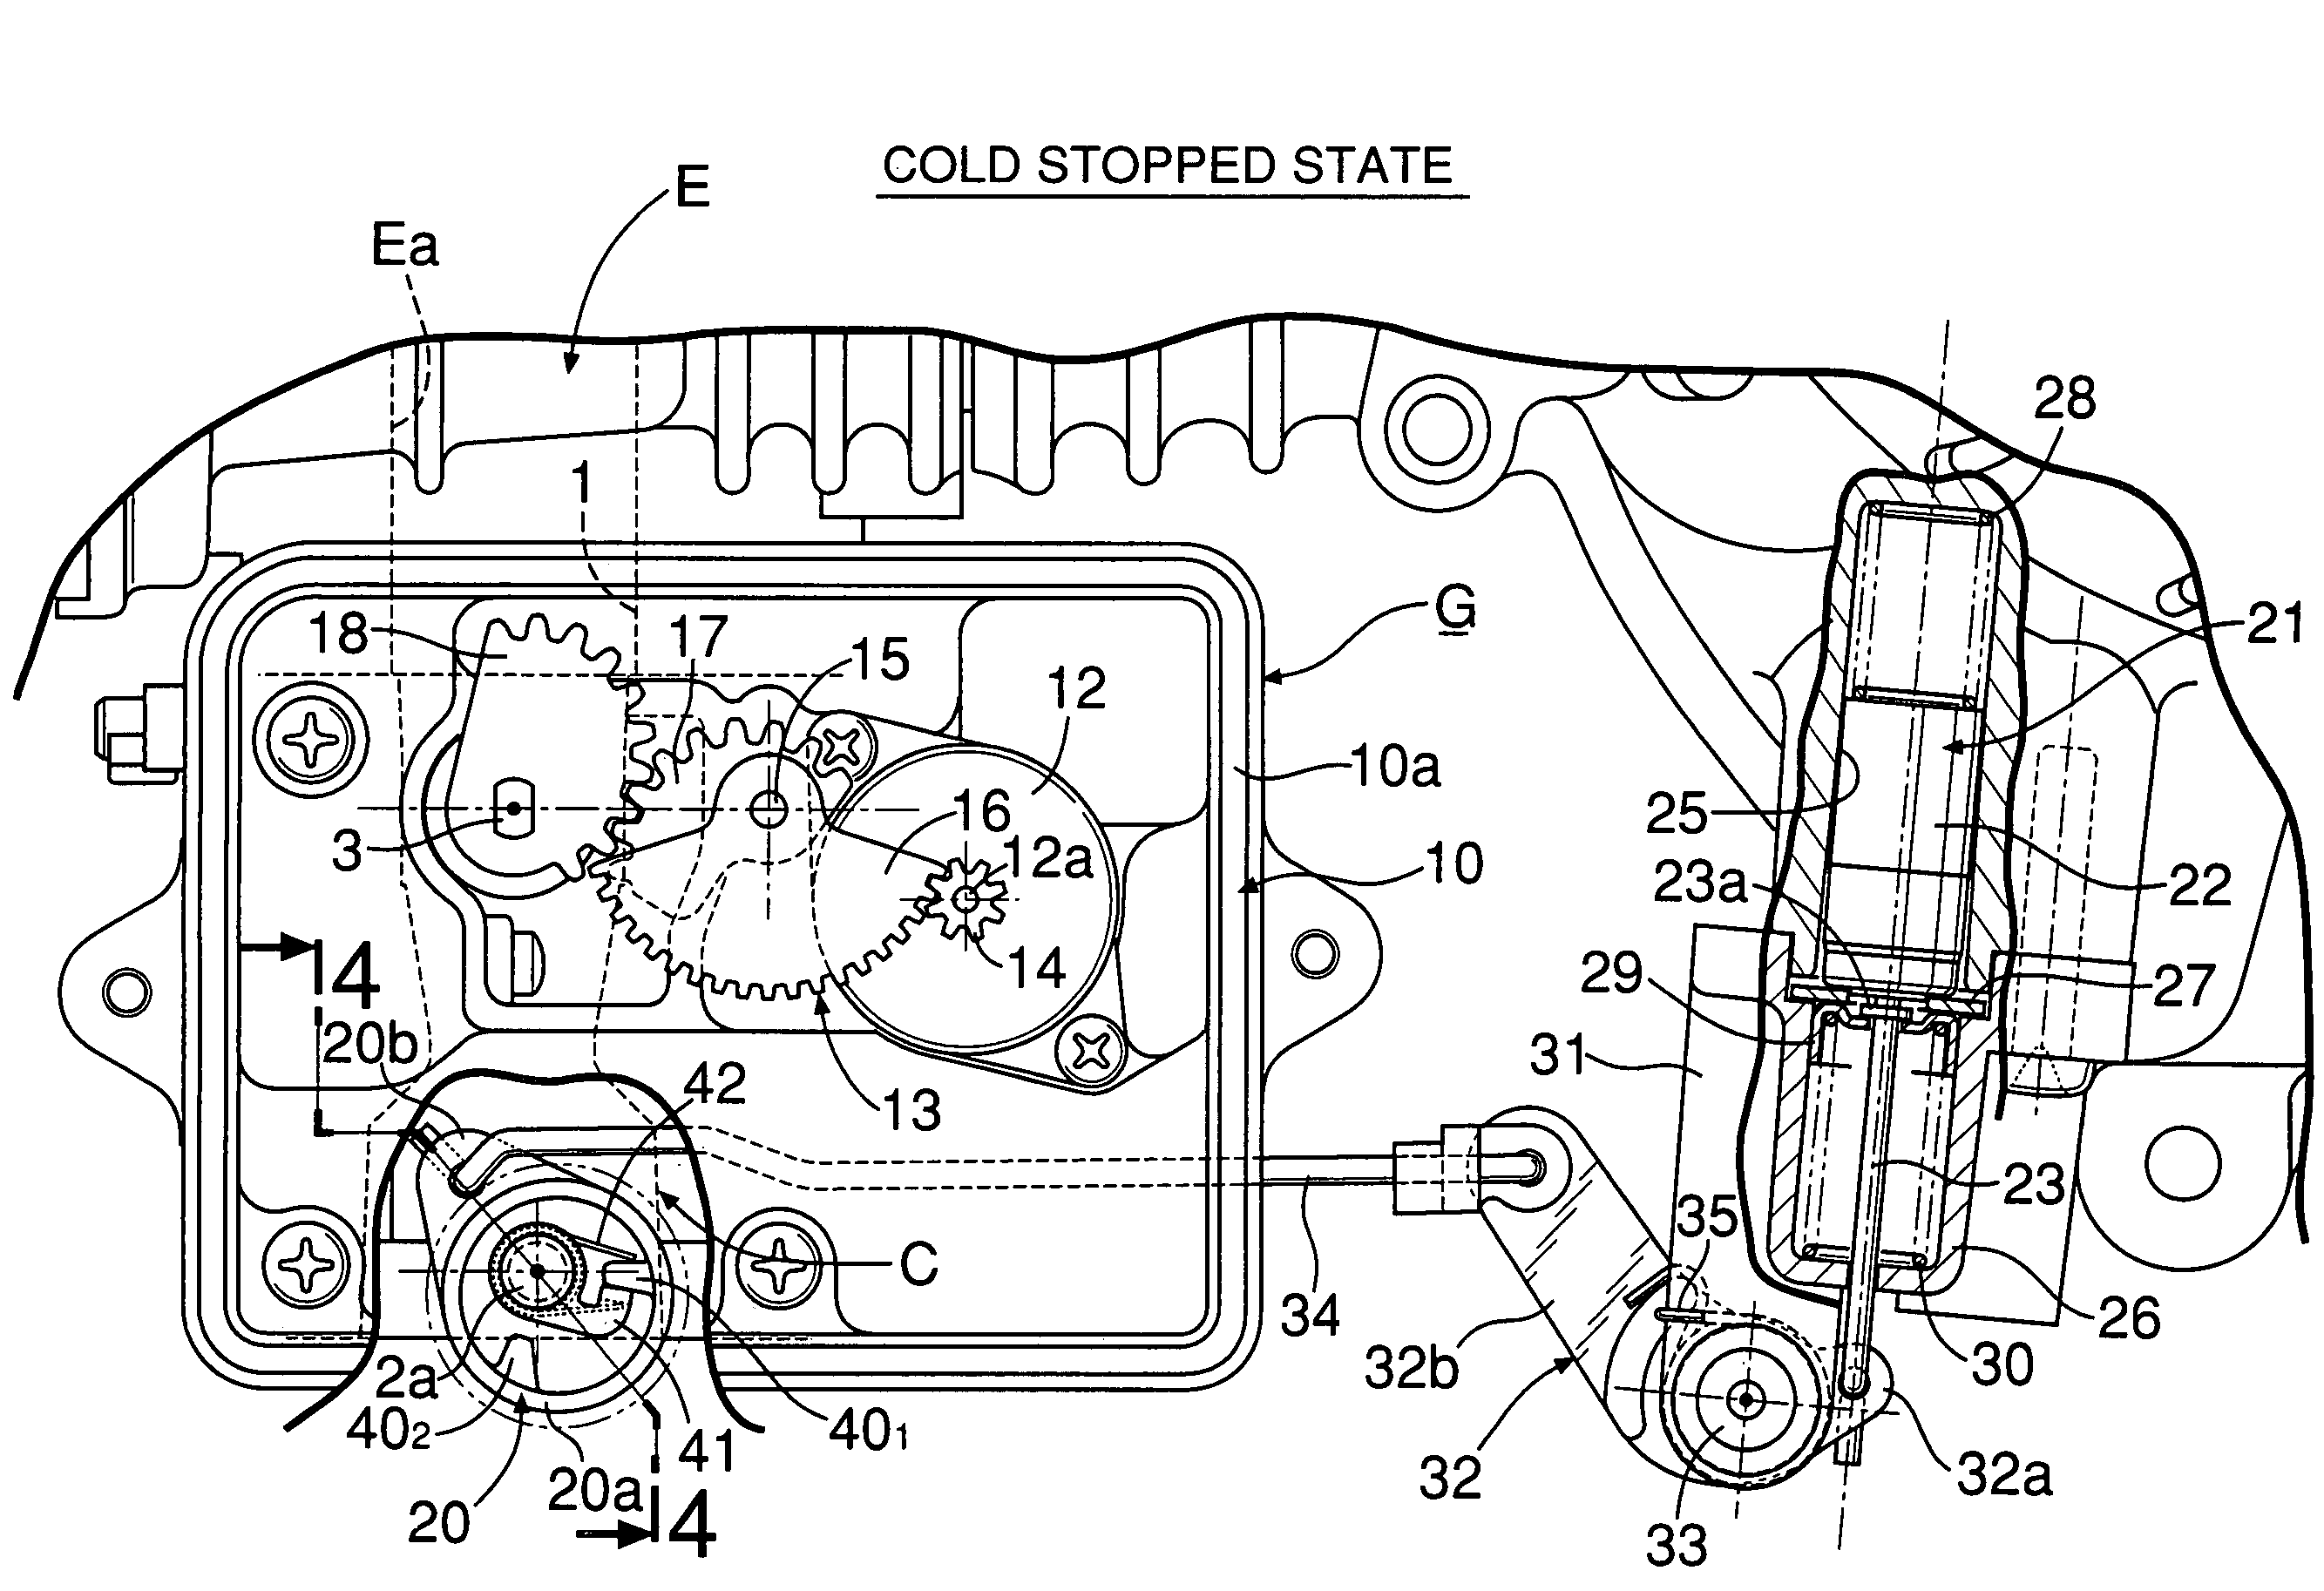 Carburetor automatic control system in engine